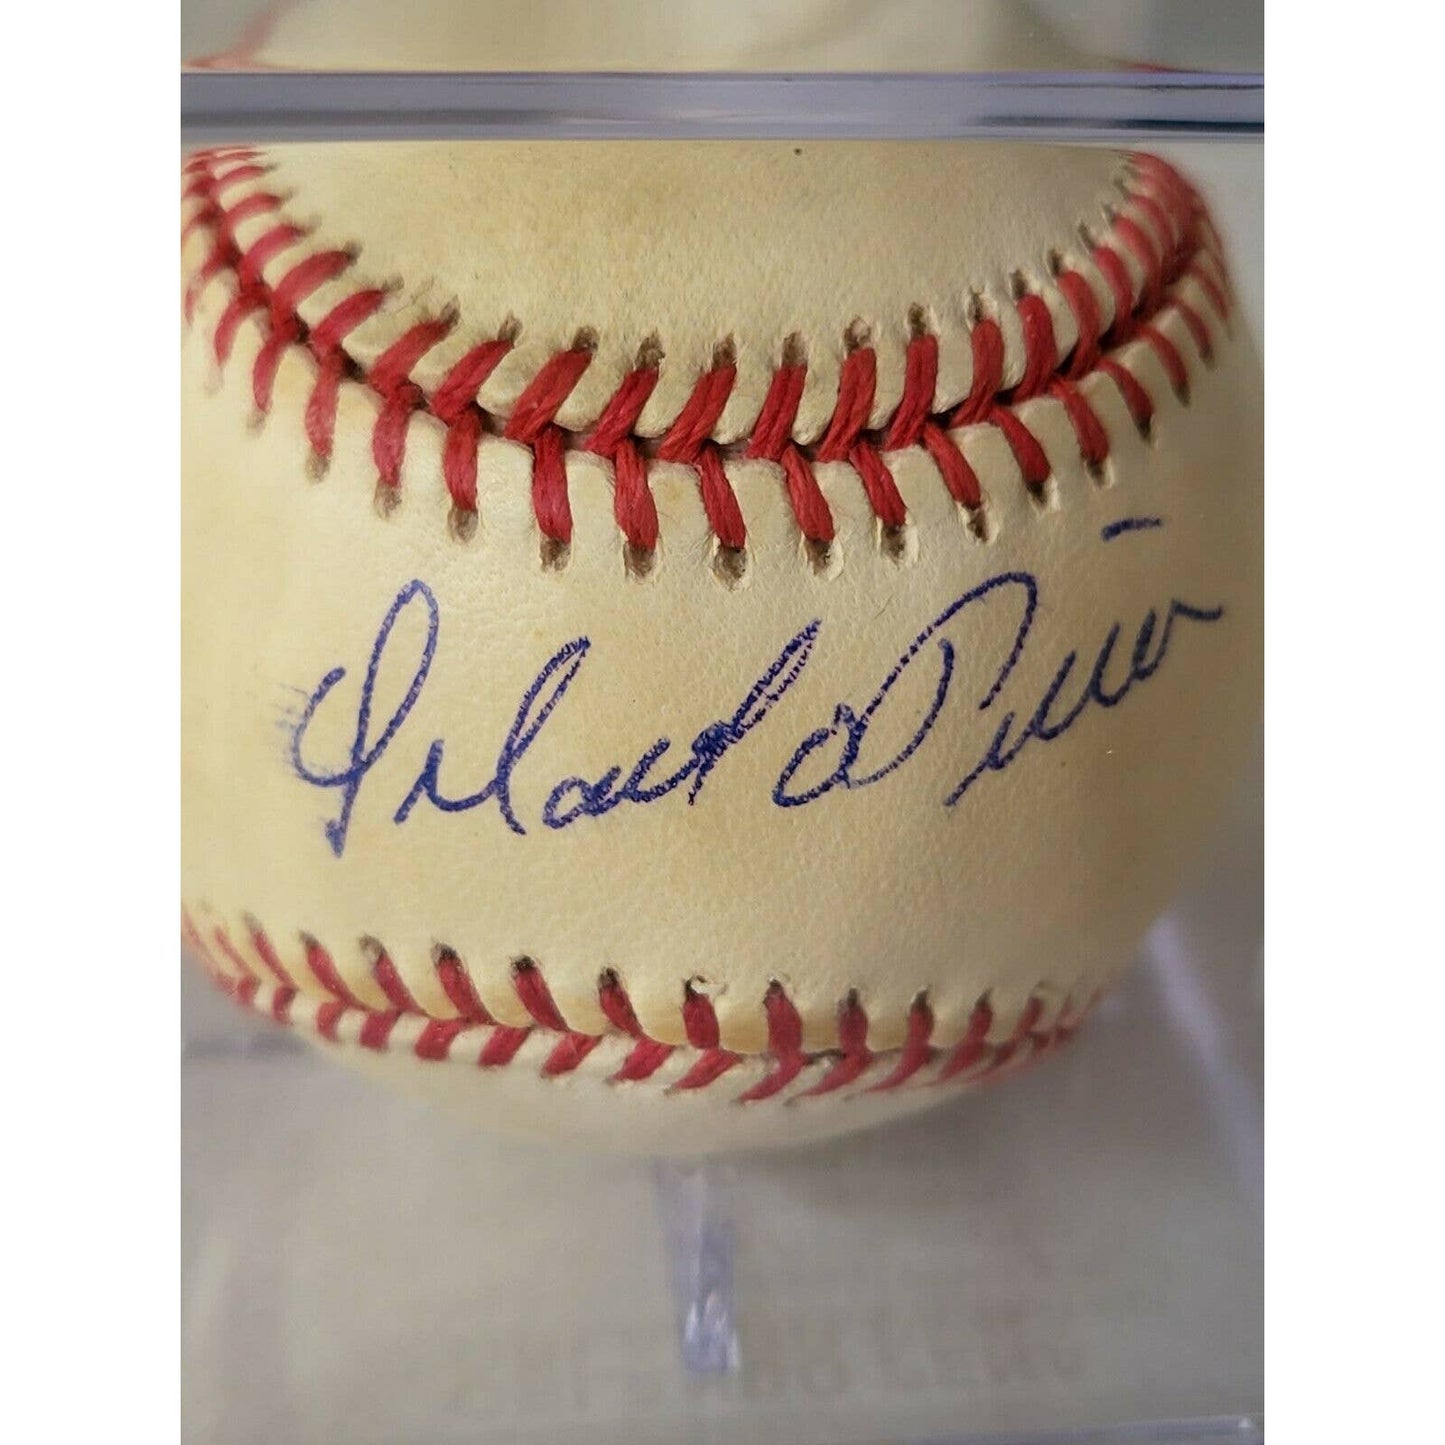 Orlando Pena Autographed/Signed Baseball TRISTAR - TreasuresEvolved